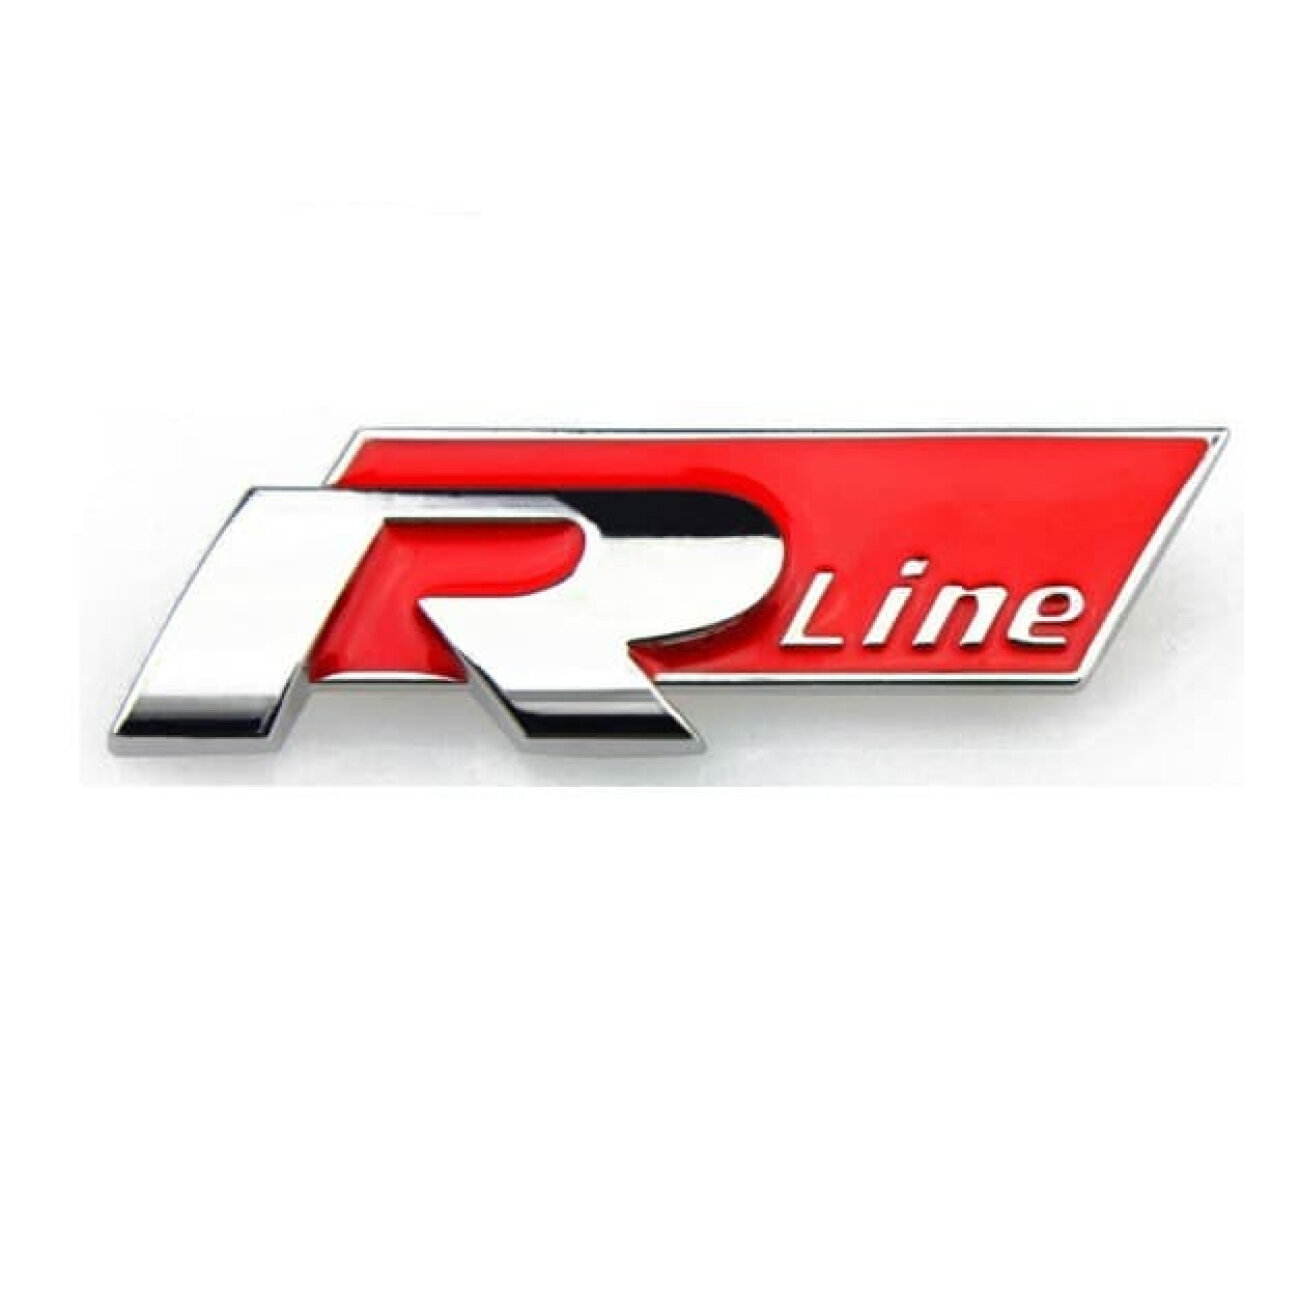 Эмблема R-line для Volkswagen красная